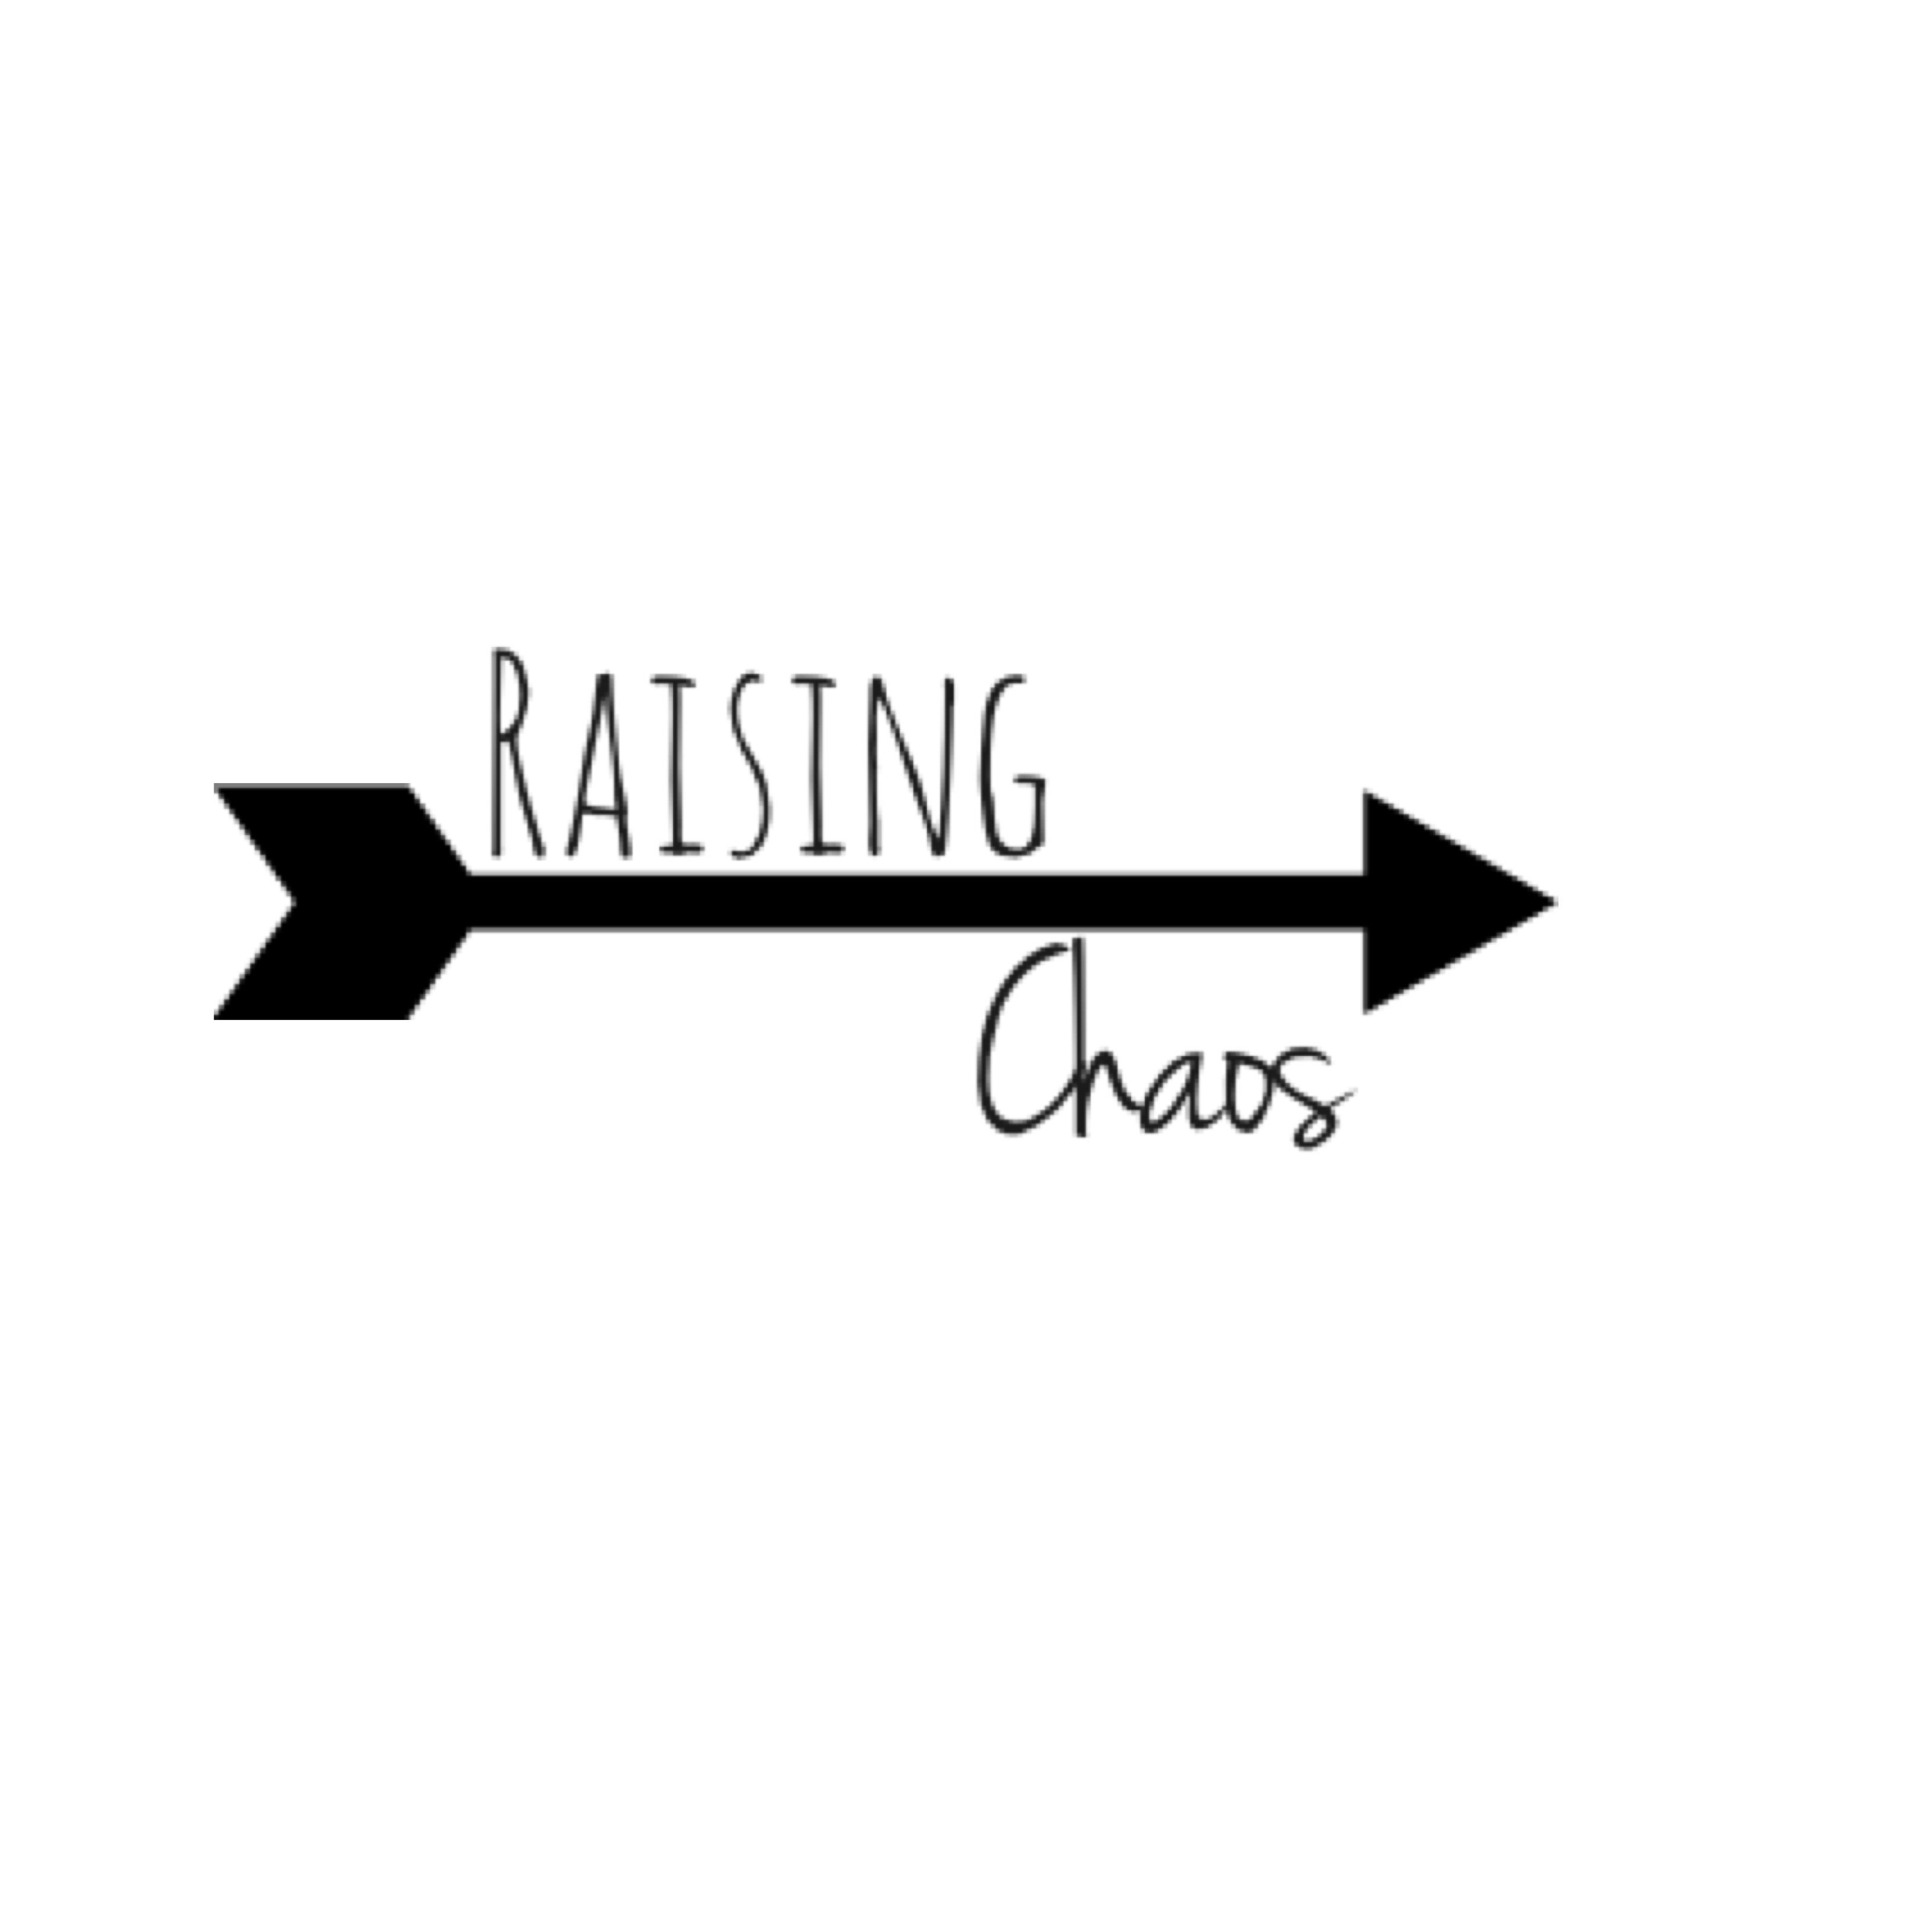 Raising Chaos